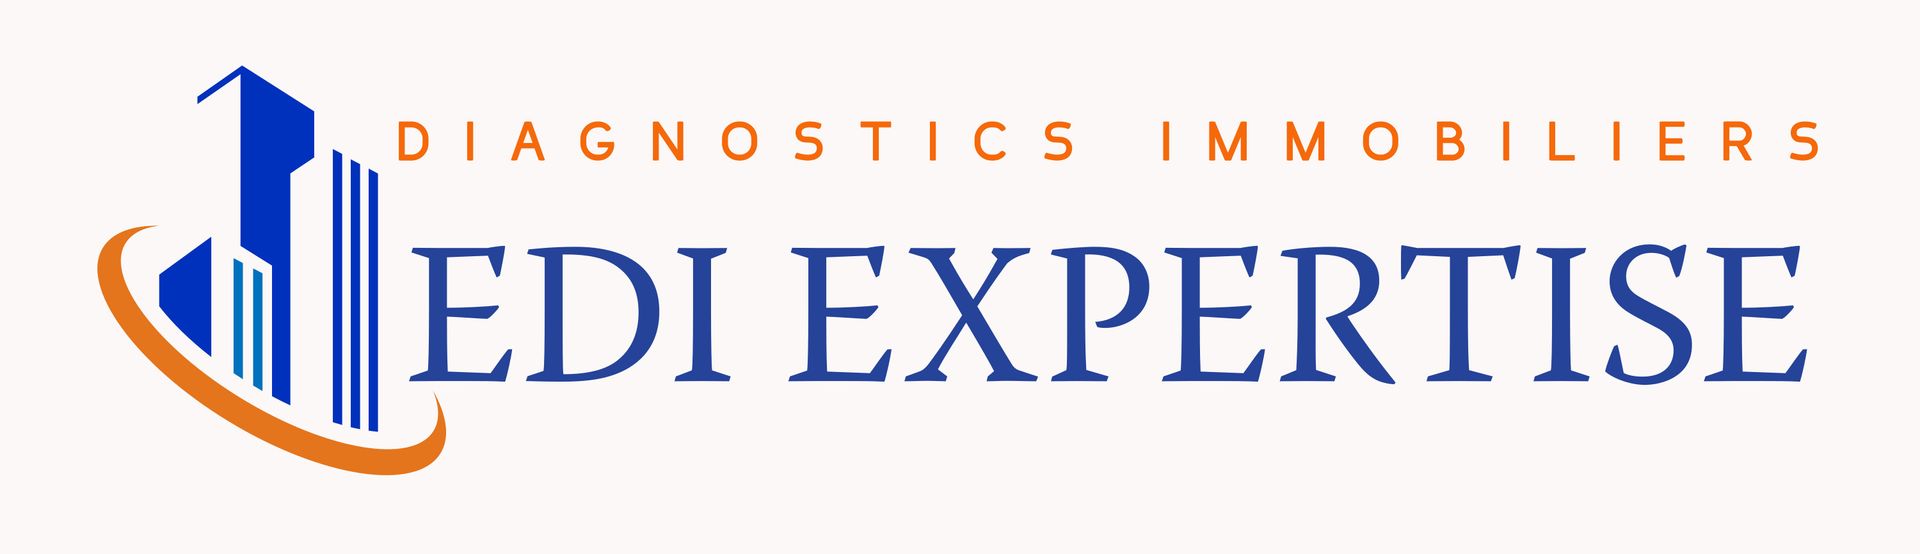 Logo EDI Expertise